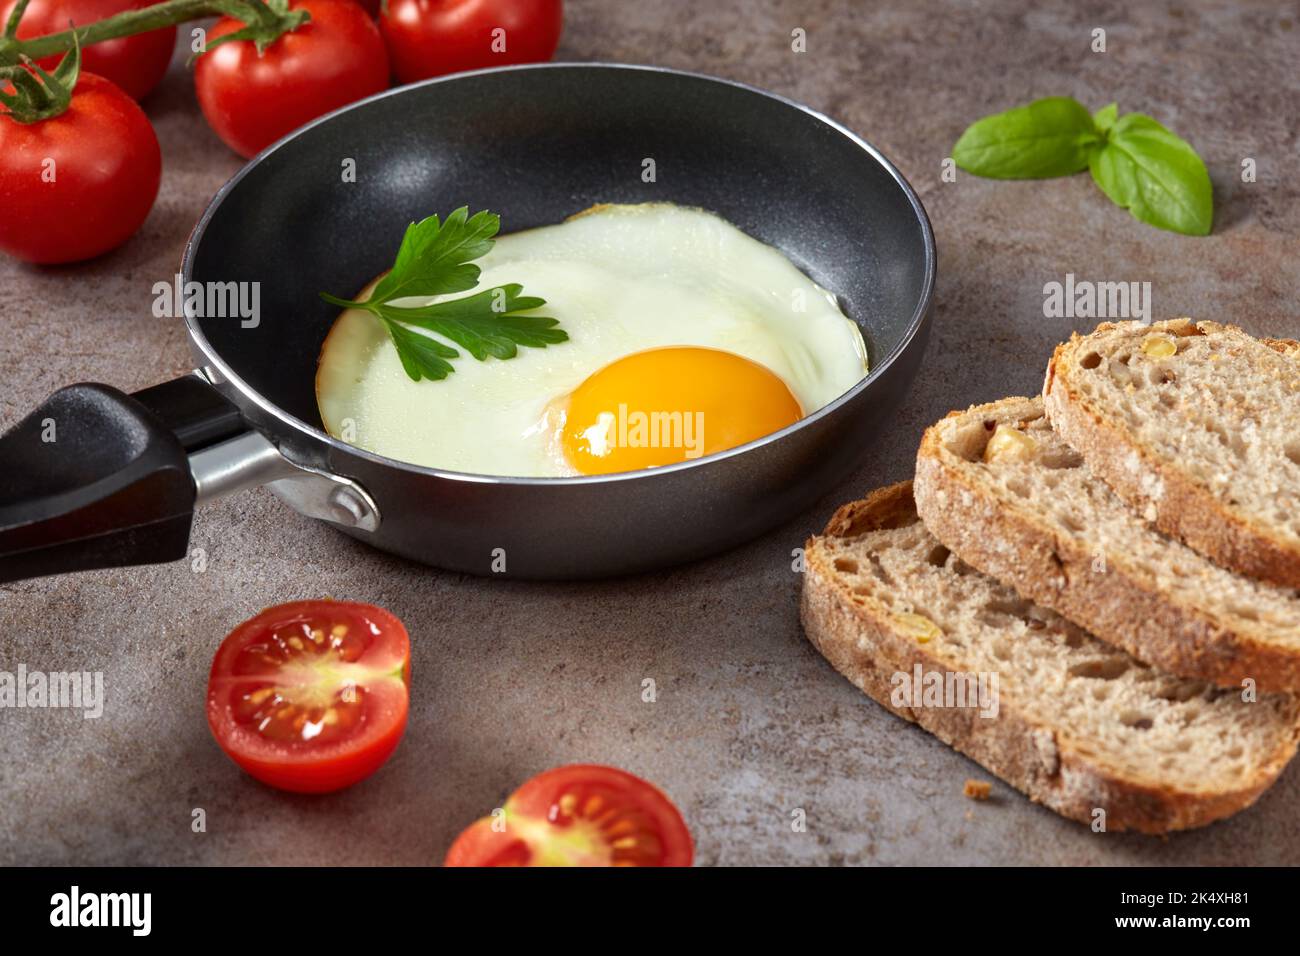 Pequeña sartén con un huevo frito, pan y tomates cherry - primer plano Foto de stock